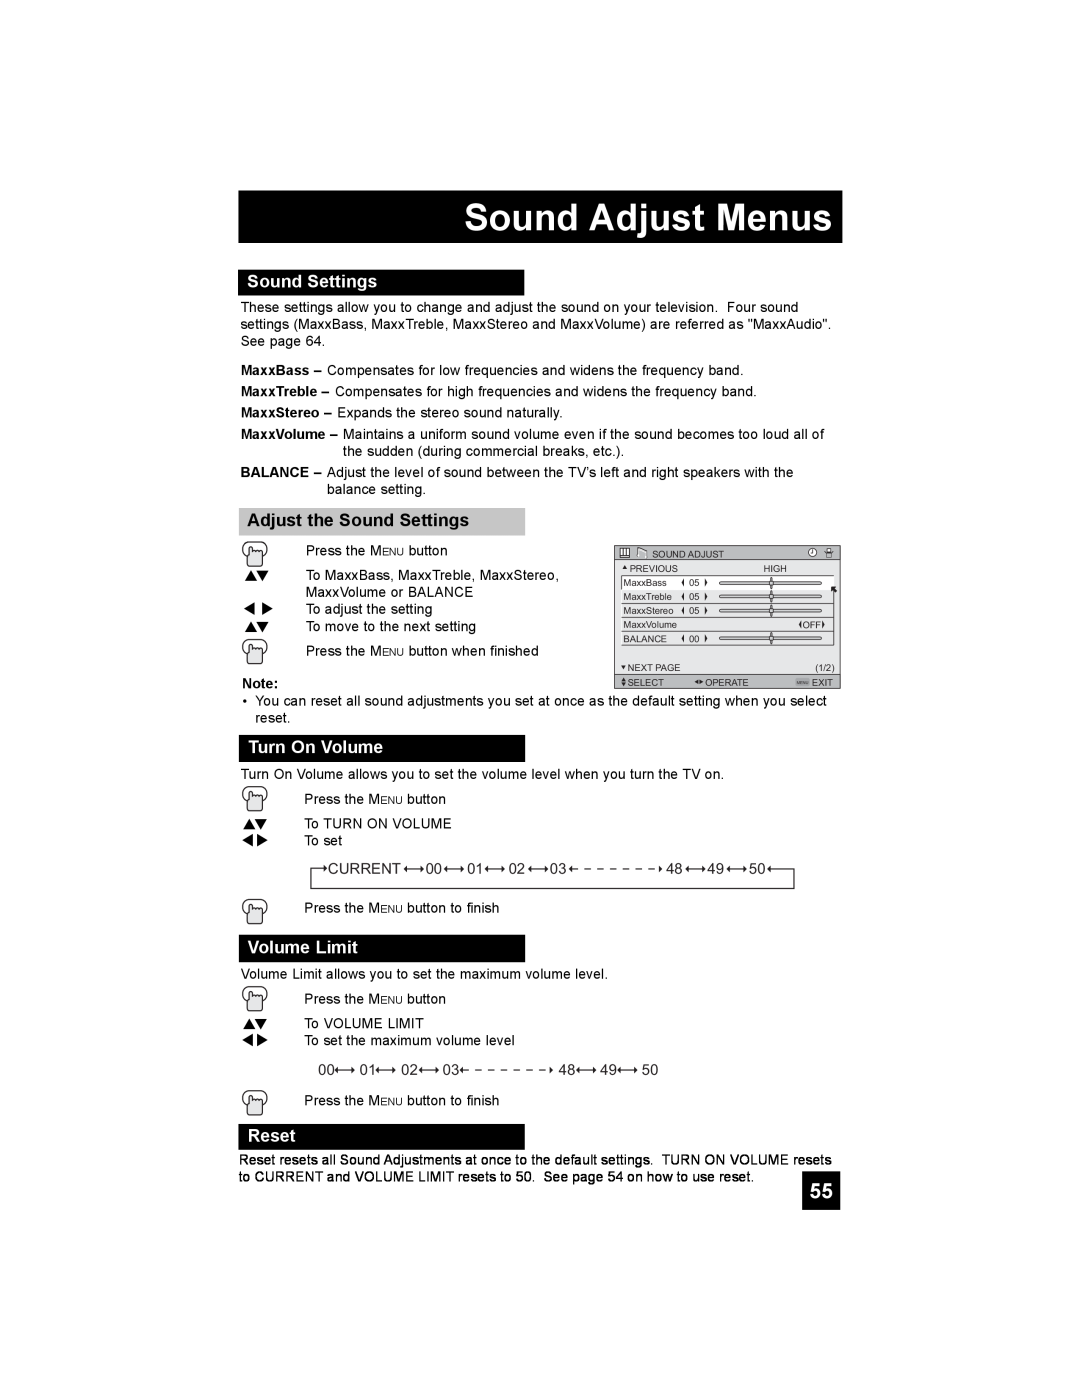 JVC LT-37X898, LT-42X898 manual Sound Adjust Menus, Adjust the Sound Settings, Turn On Volume, Volume Limit, Reset 